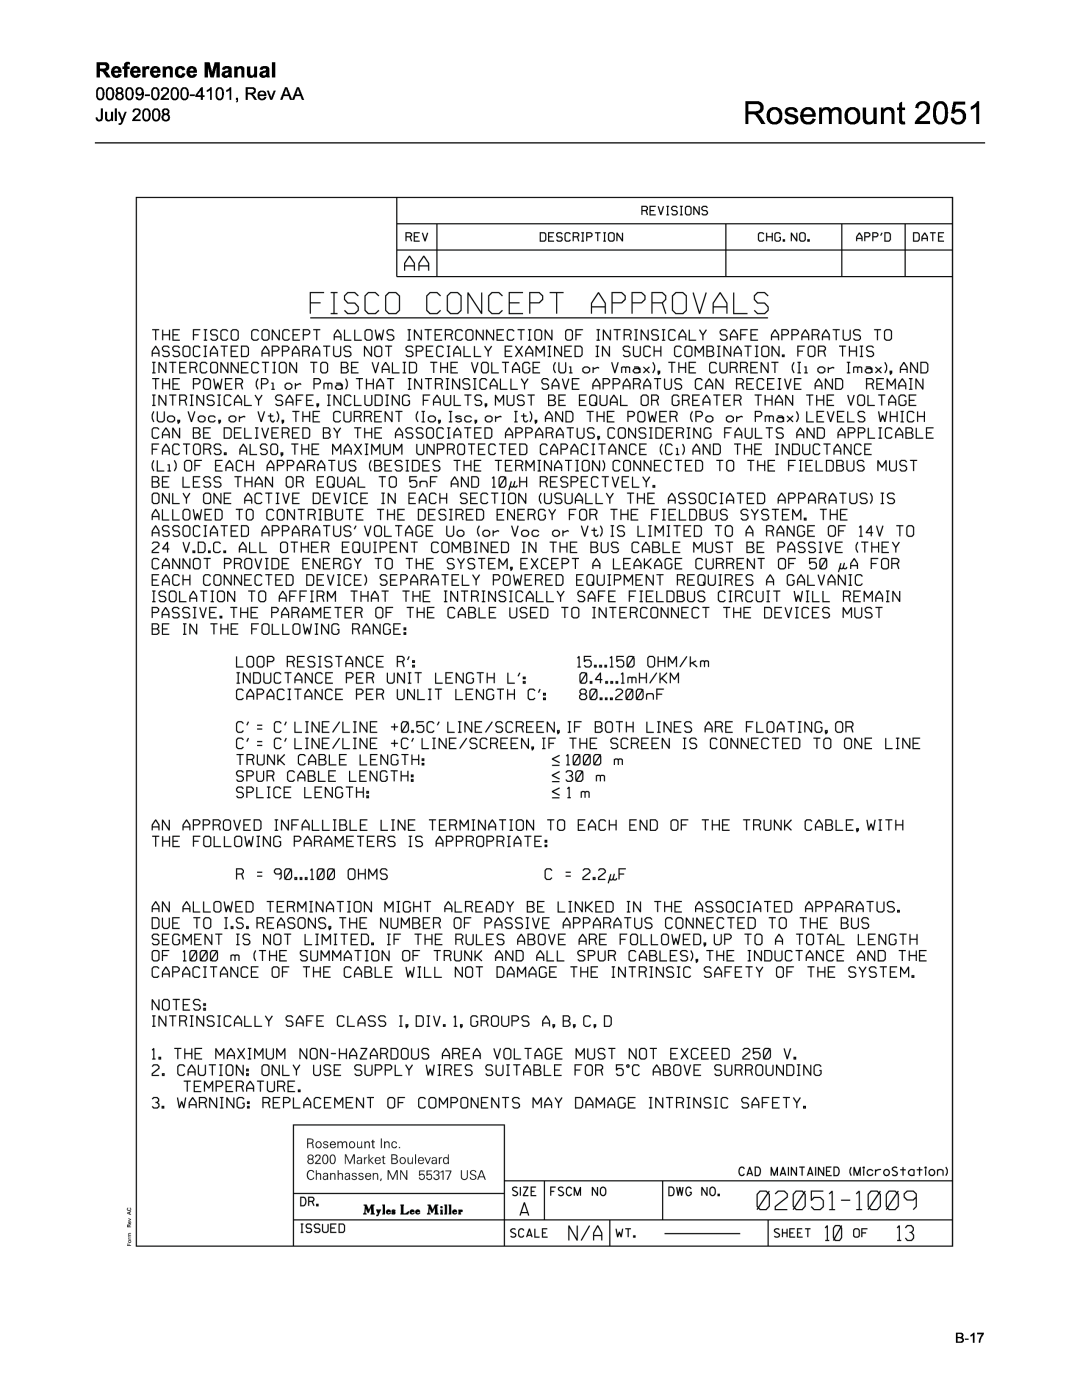 Emerson Process Management 2051 manual Rosemount, Reference Manual, B-17 